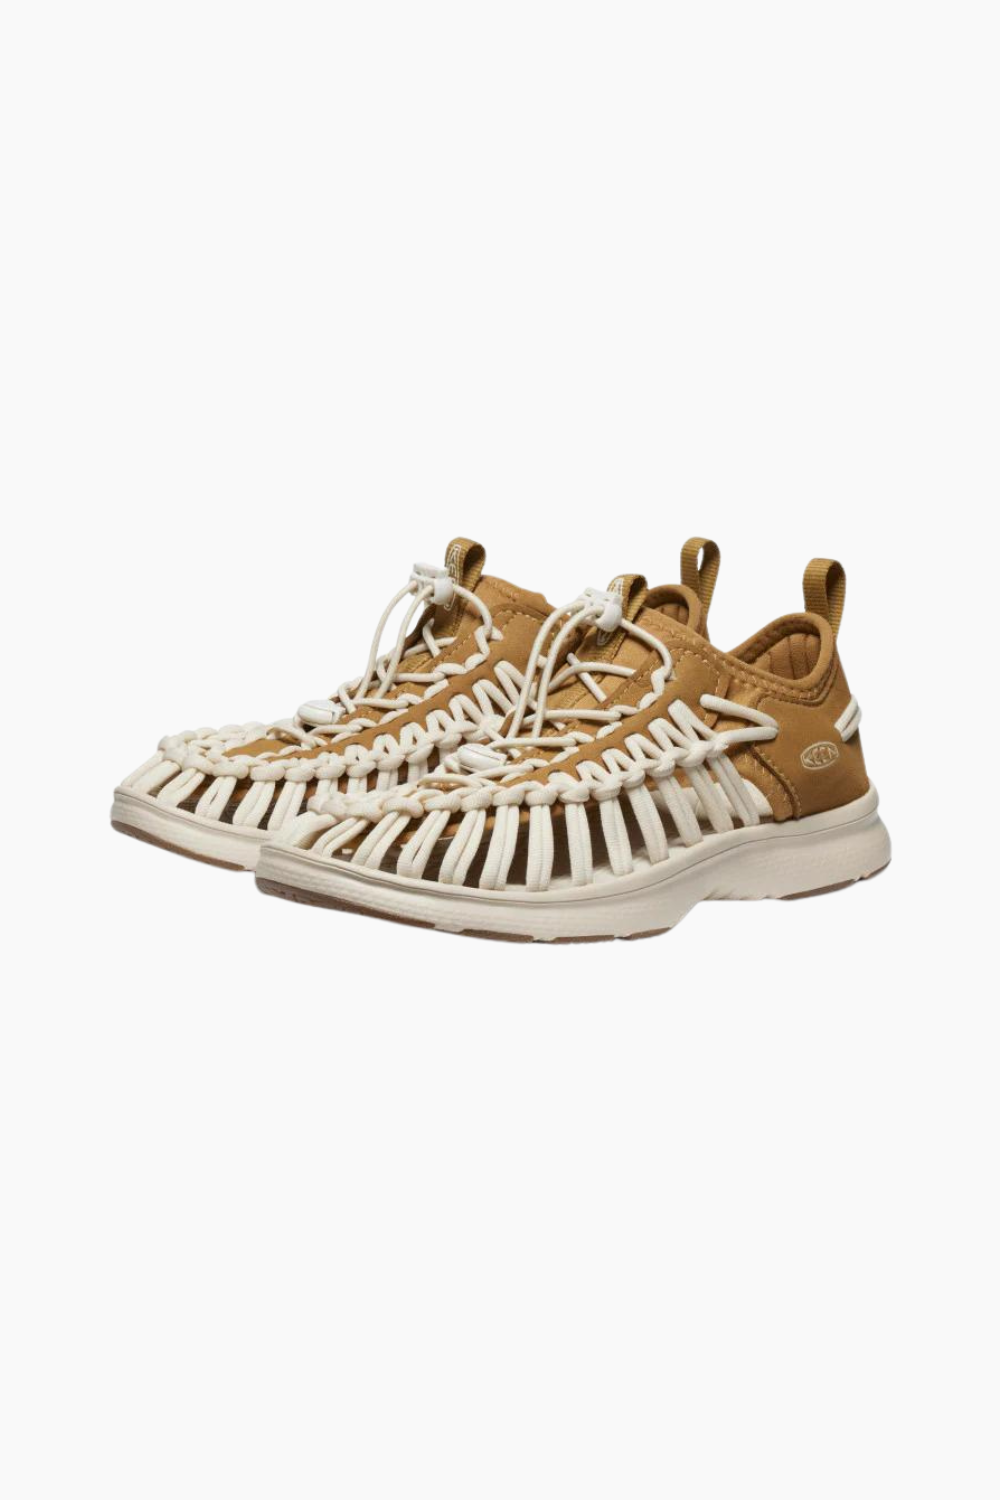 UNEEK O3 Sneaker Sandal - Bistre/Safari - KEEN